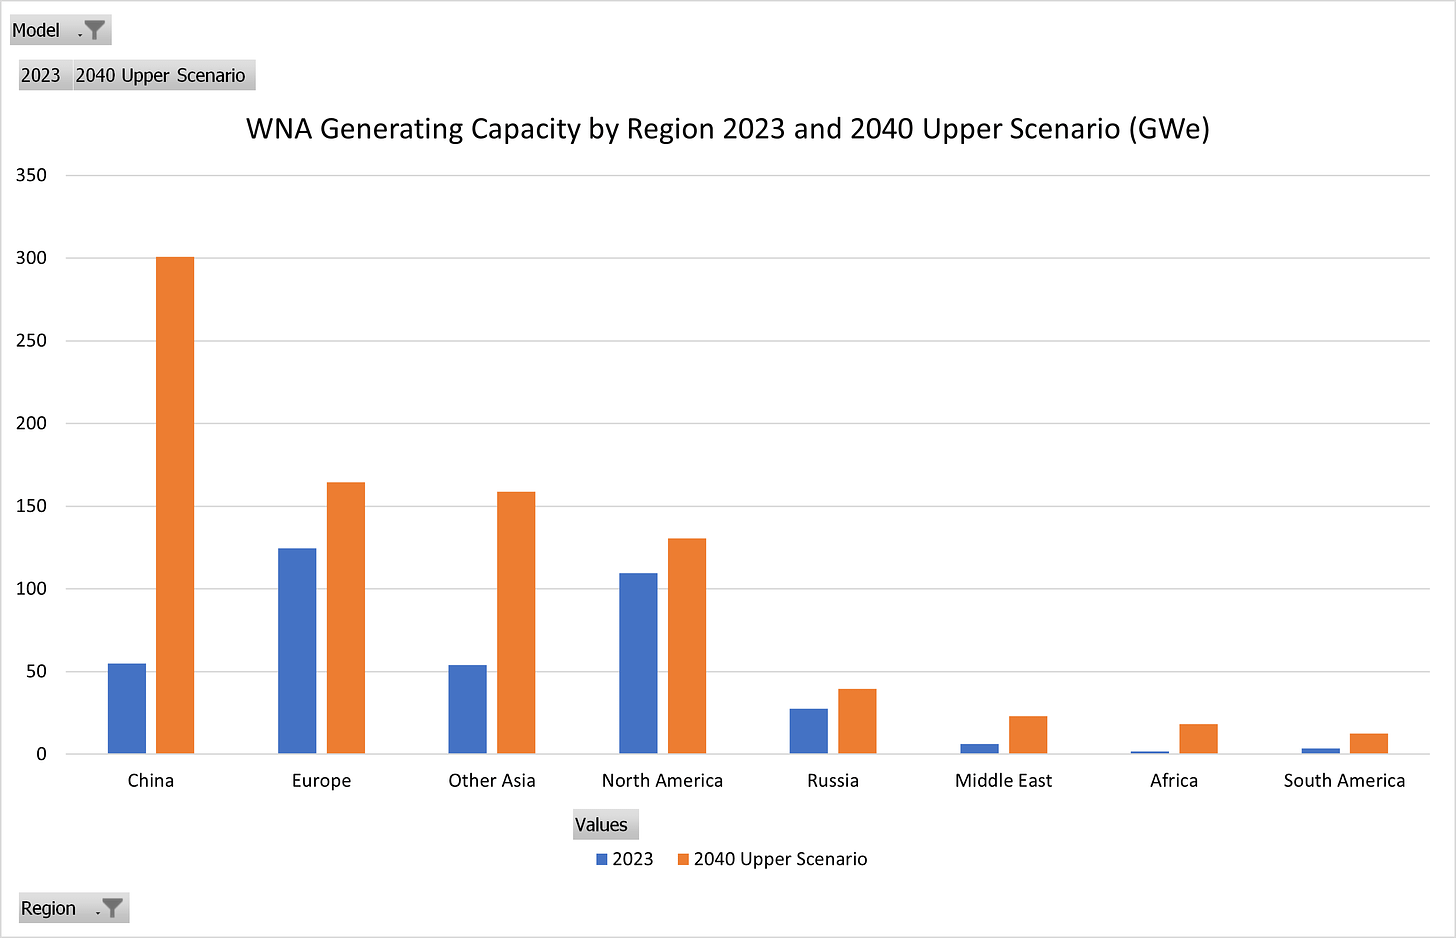 Figure 5 - WNA Generating Capacity by Region 2023 and 2040 Upper Scenario (GWe)